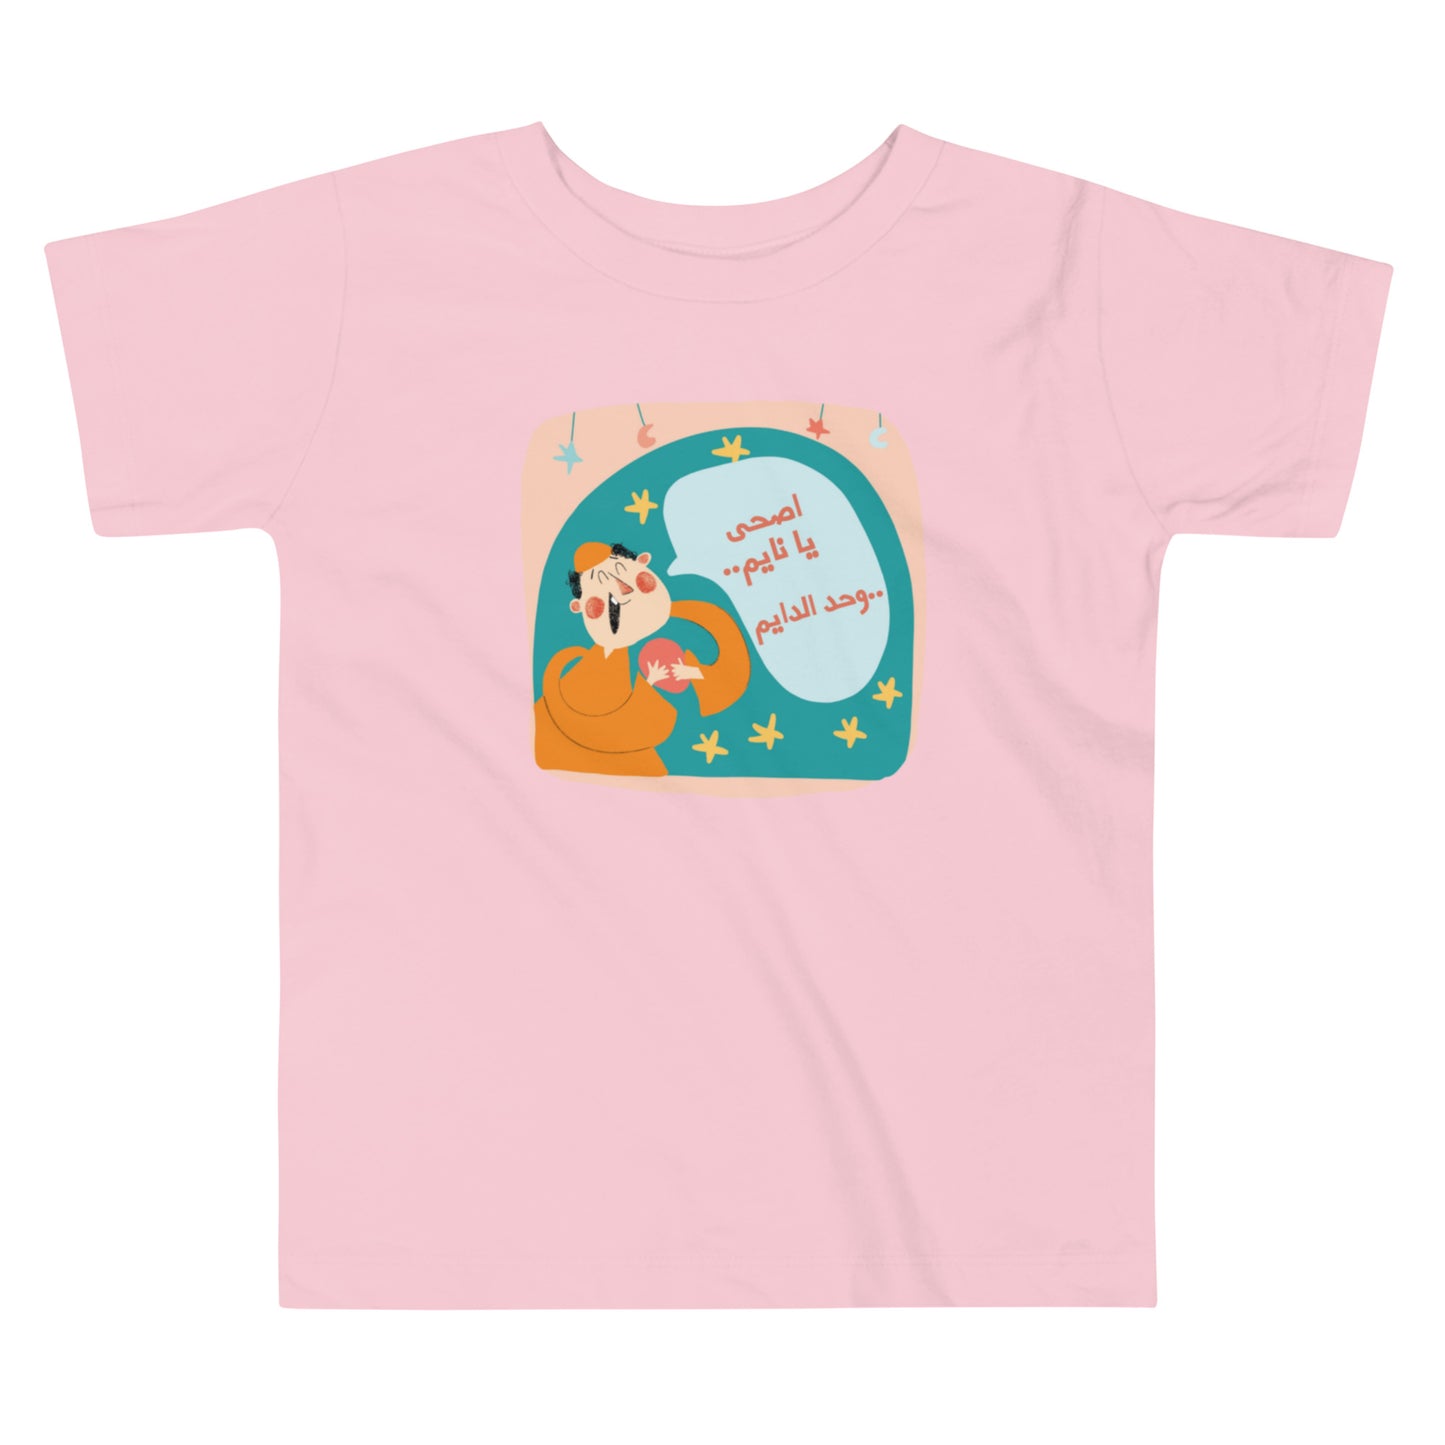 Msaharati Toddler Shirt